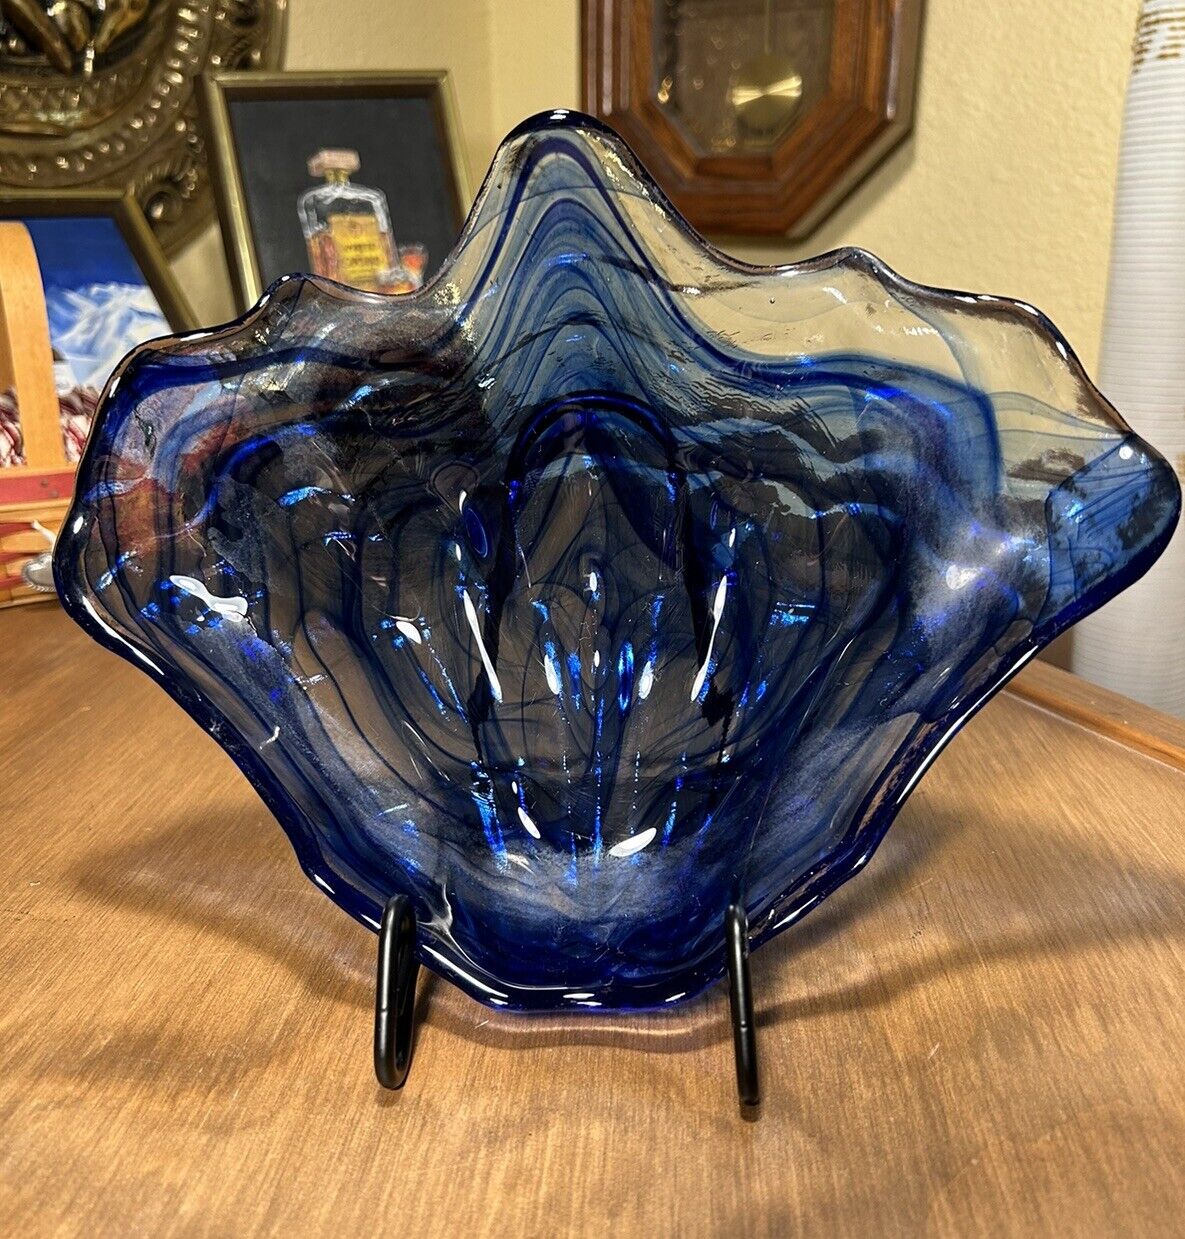 Cobalt Blue Swirl Pressed Art Glass Clam Shell Dish 10” wide, sits on 3 feet